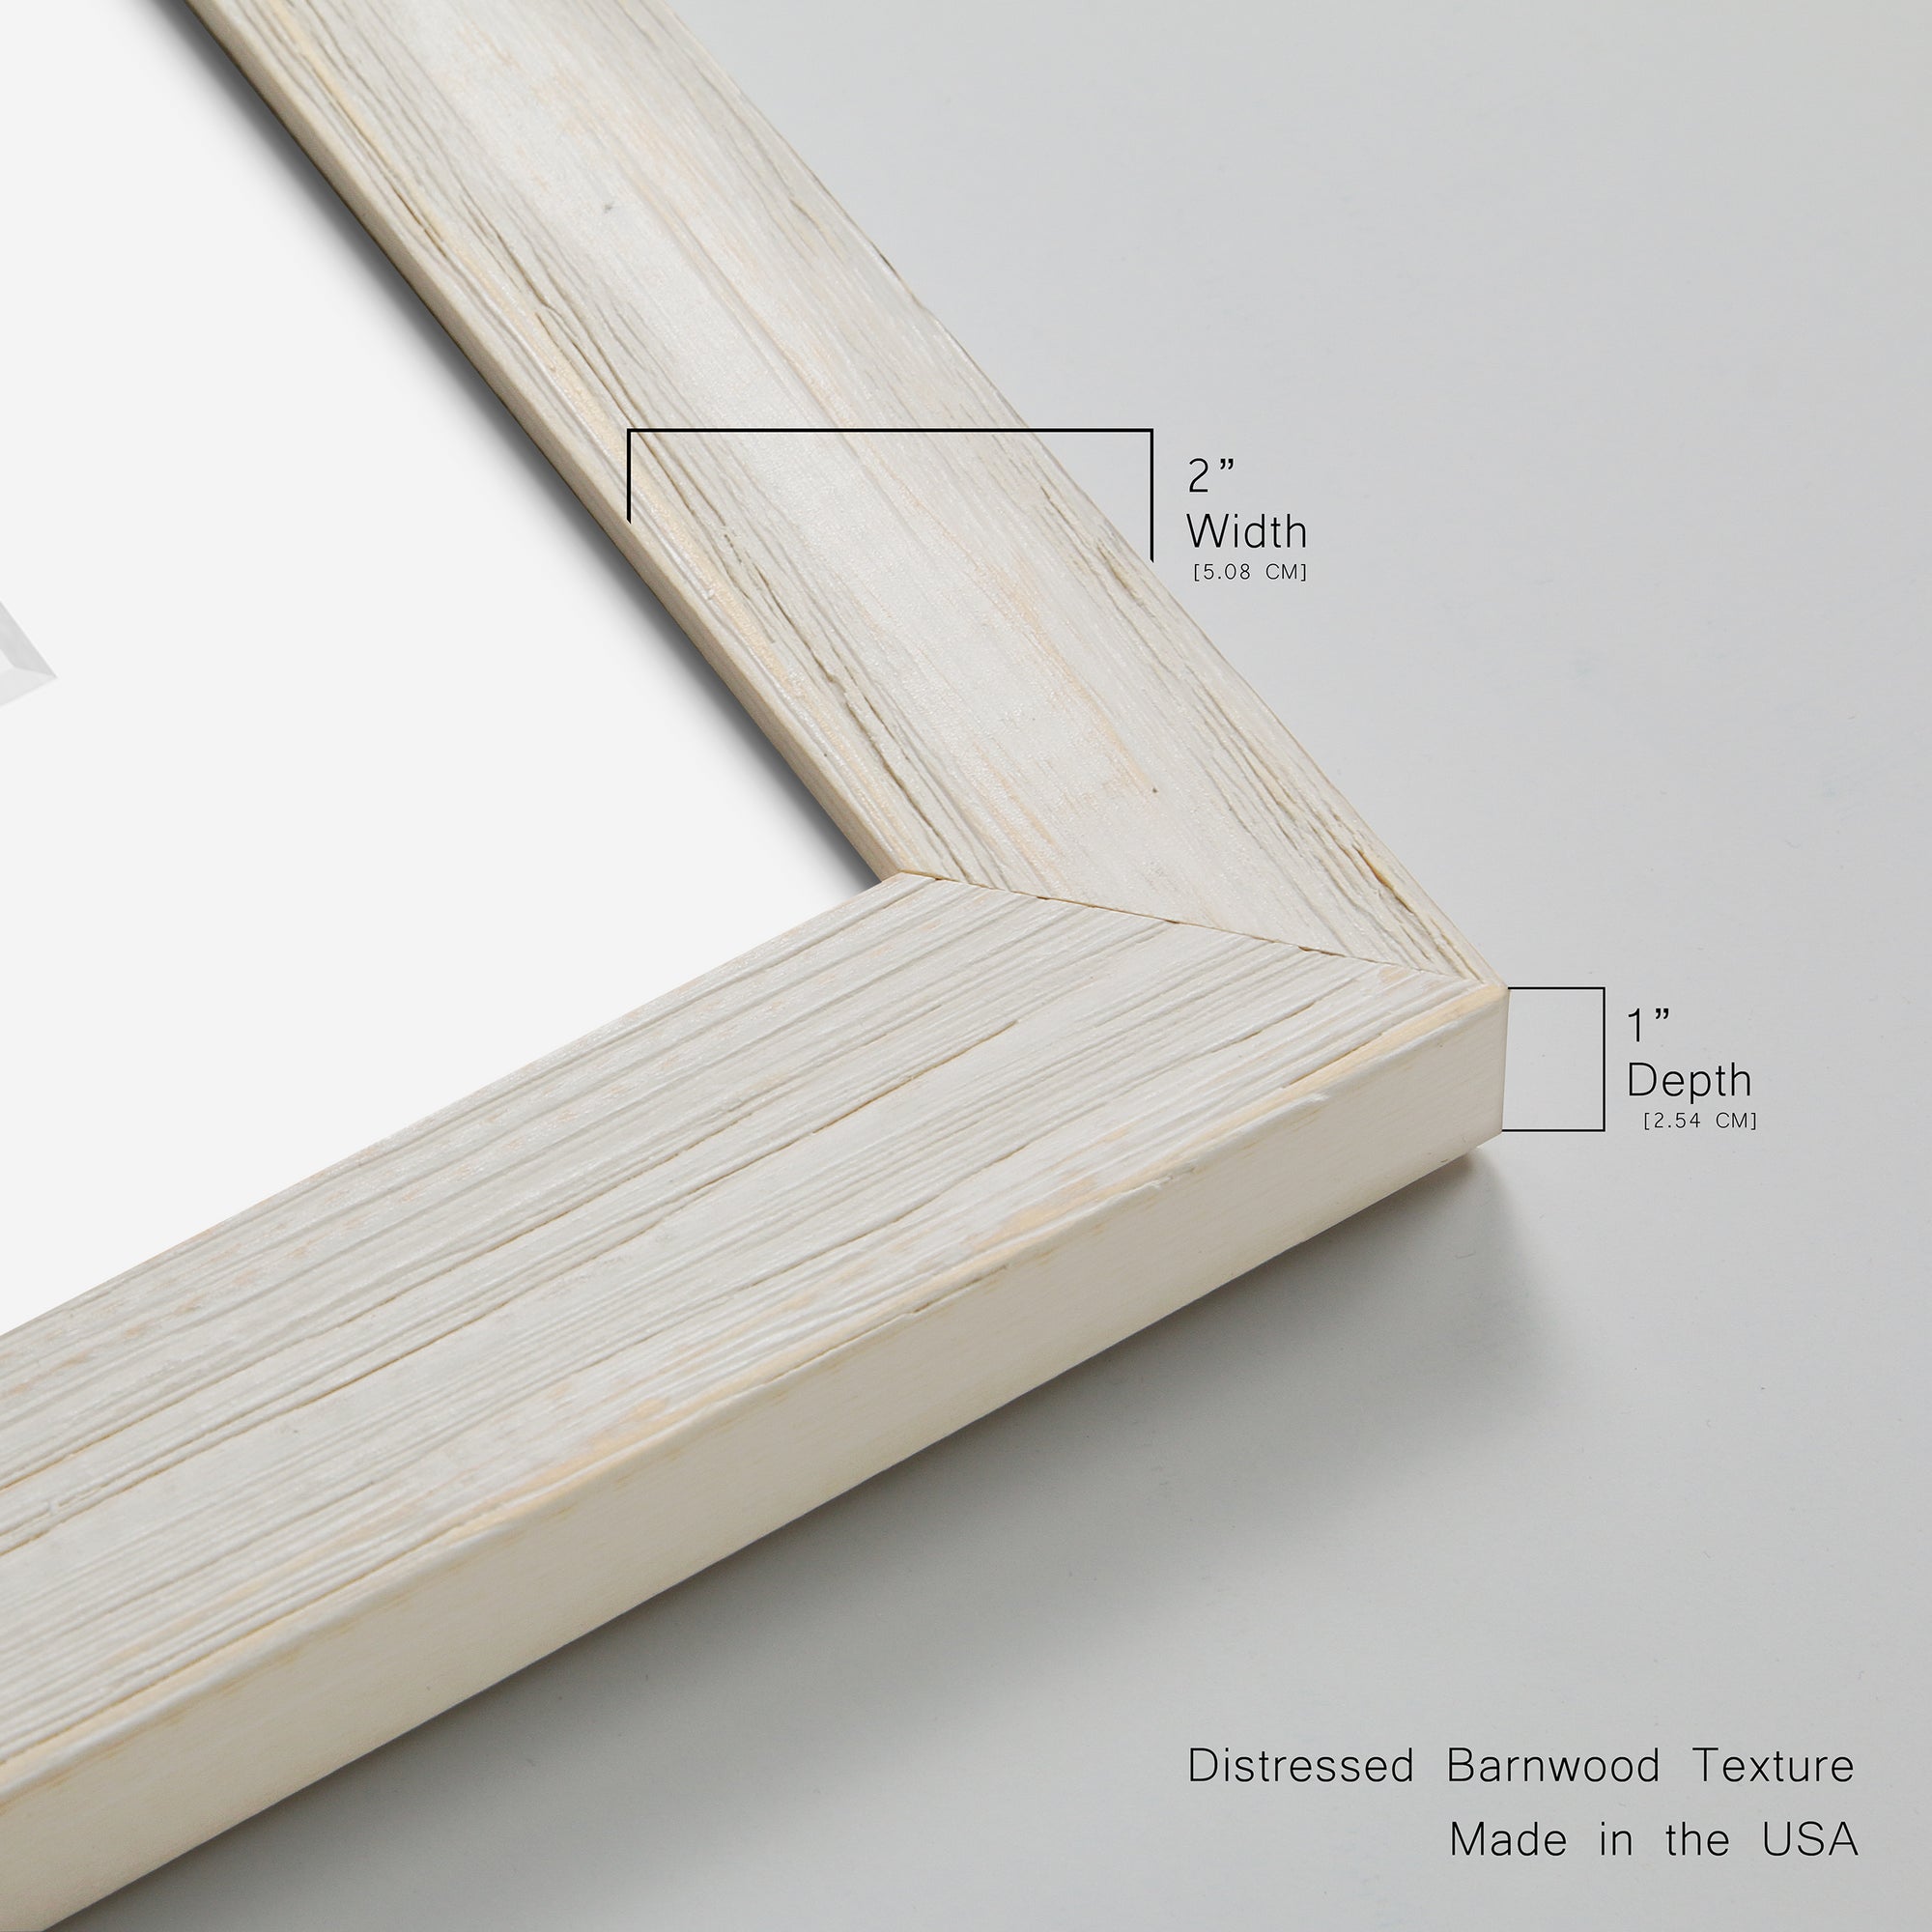 Pheasant Trio-Premium Framed Print - Ready to Hang